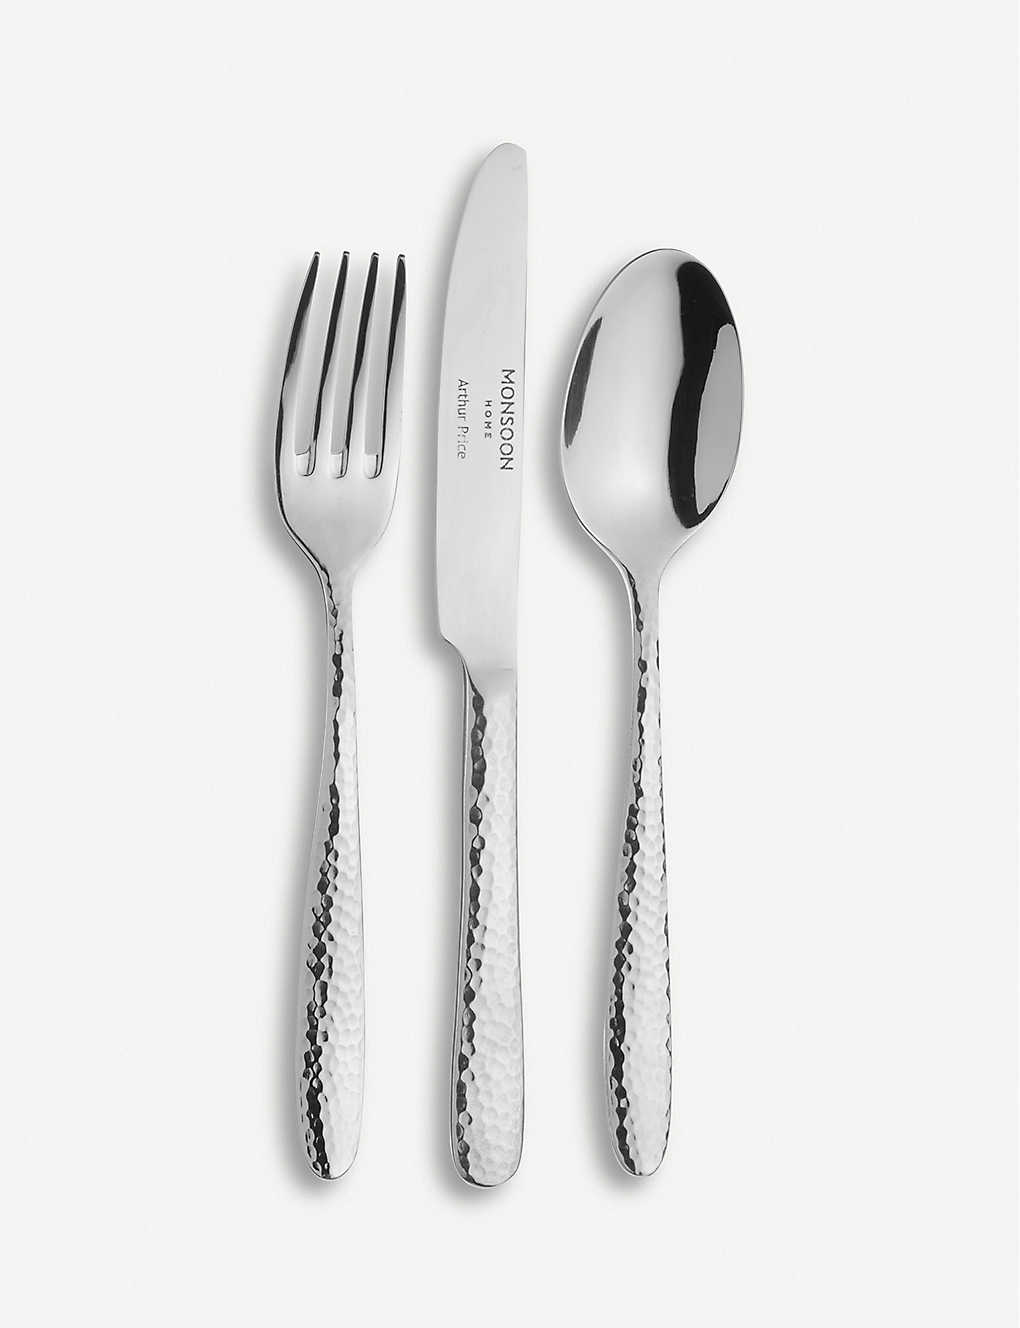 Arthur Price Mirage Stainless Steel Child's Cutlery 3-piece Set